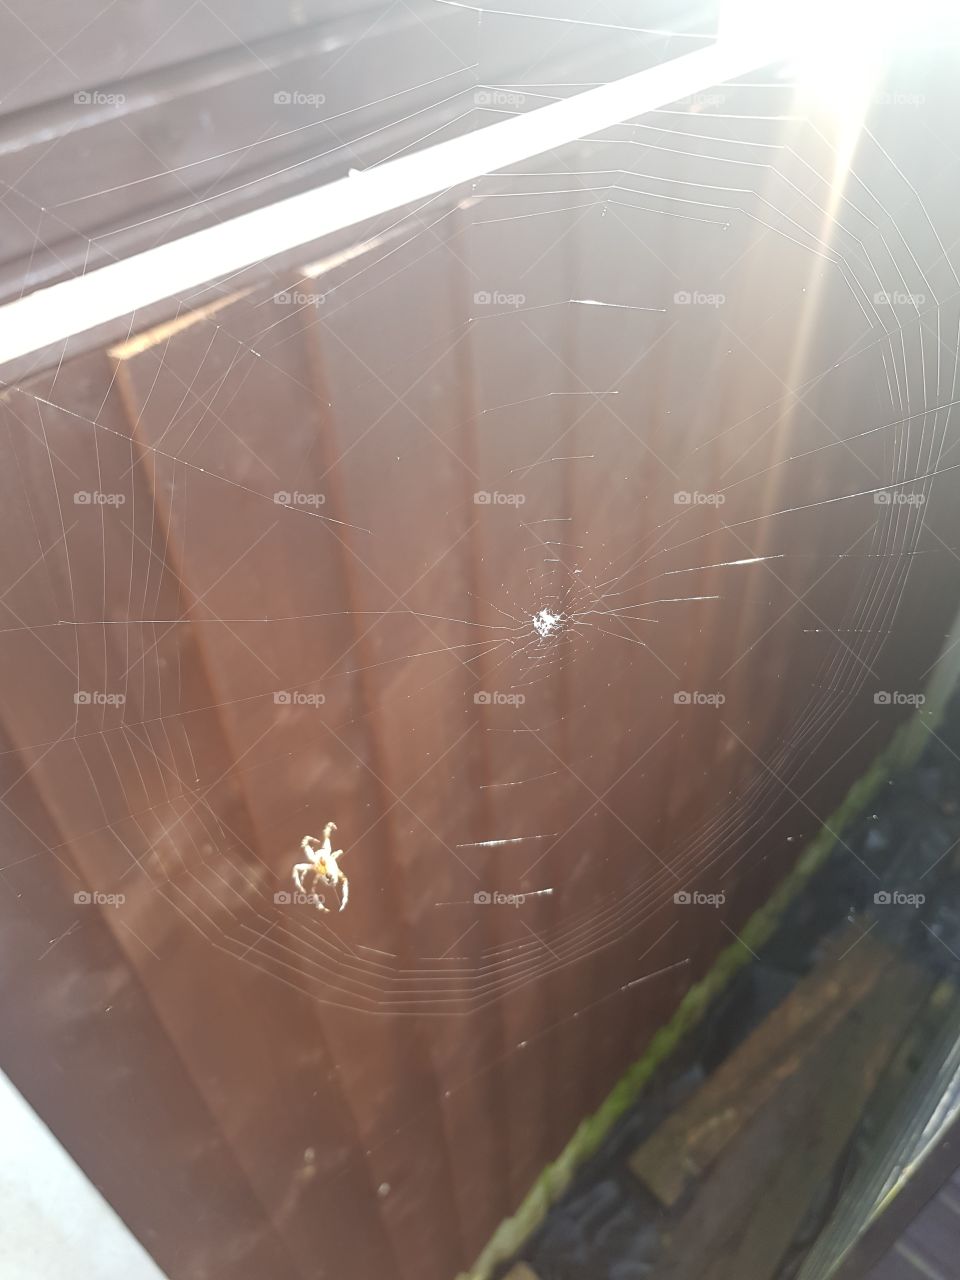 Spider building a web